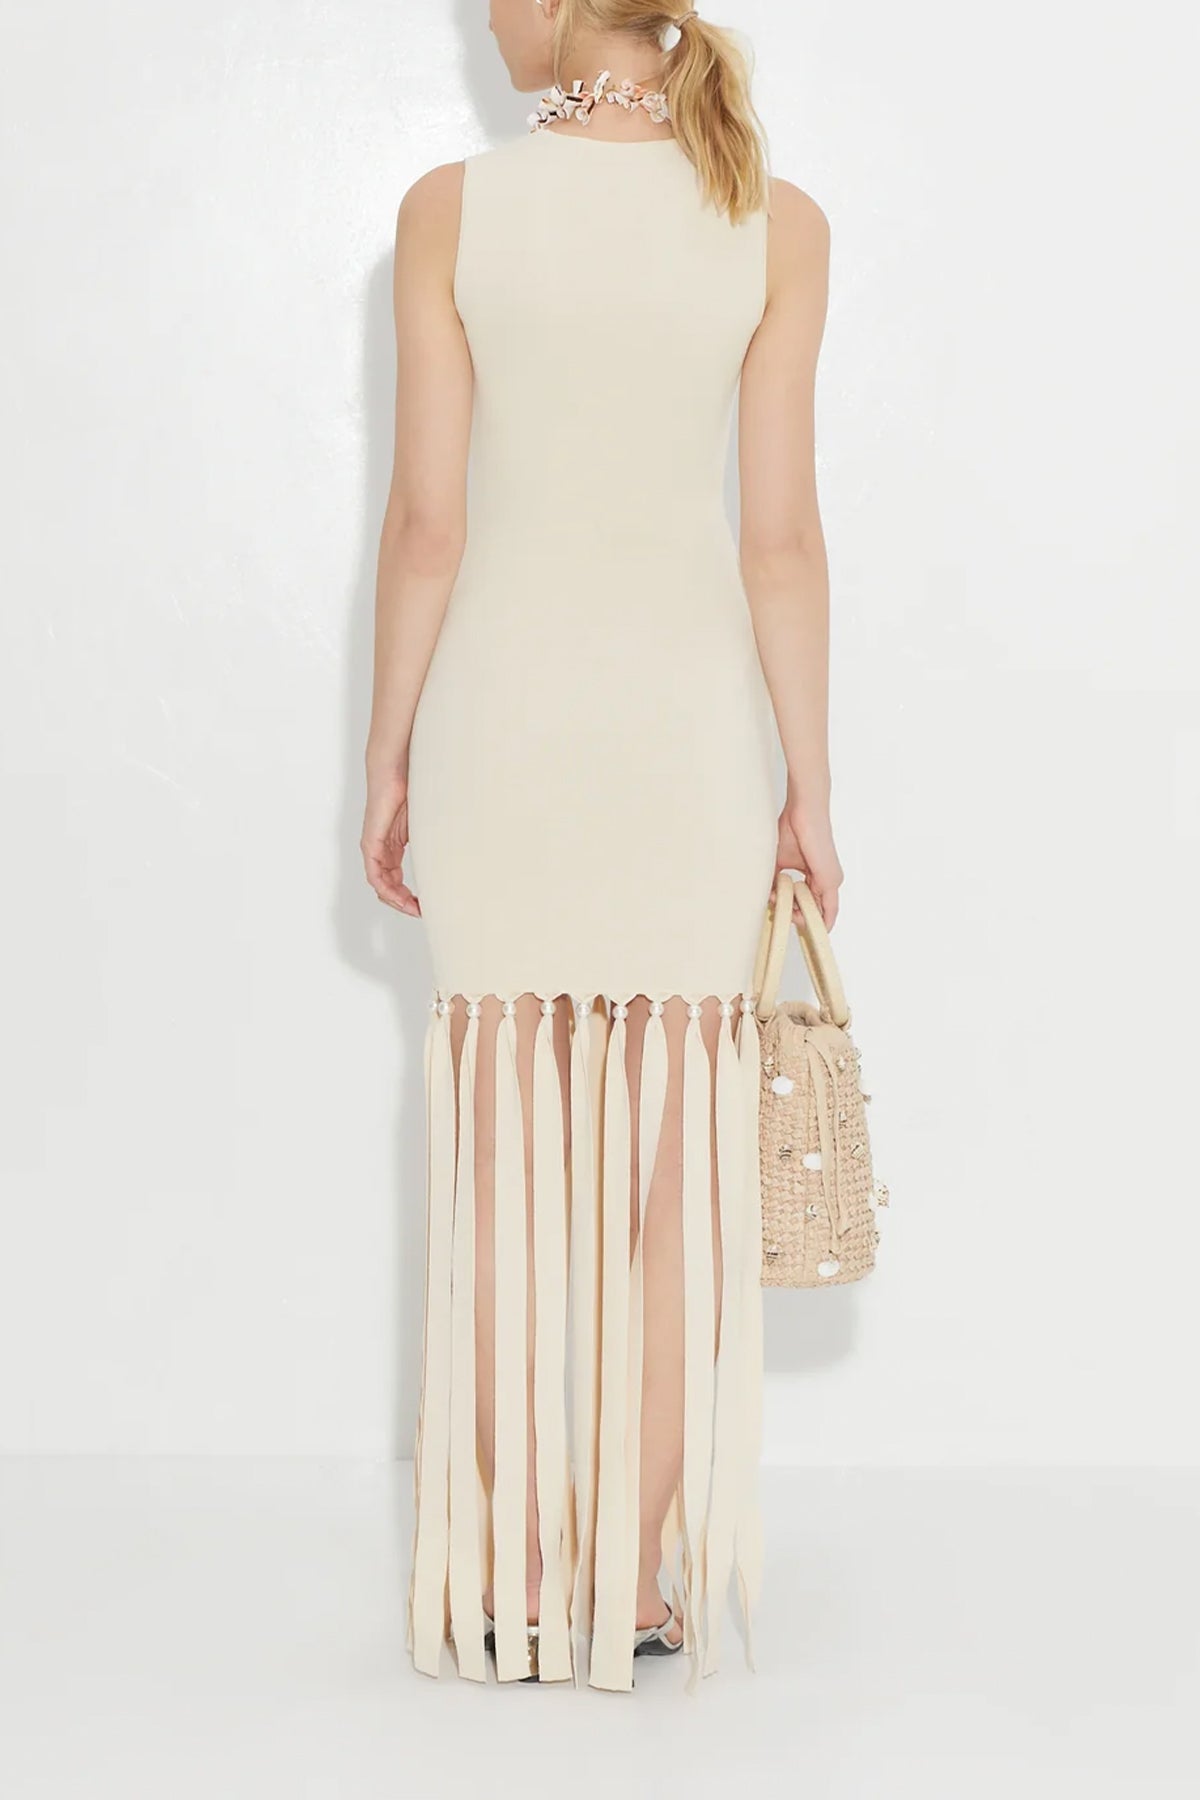 Eclisse Sleeveless Knit Dress in Ivory - shop-olivia.com